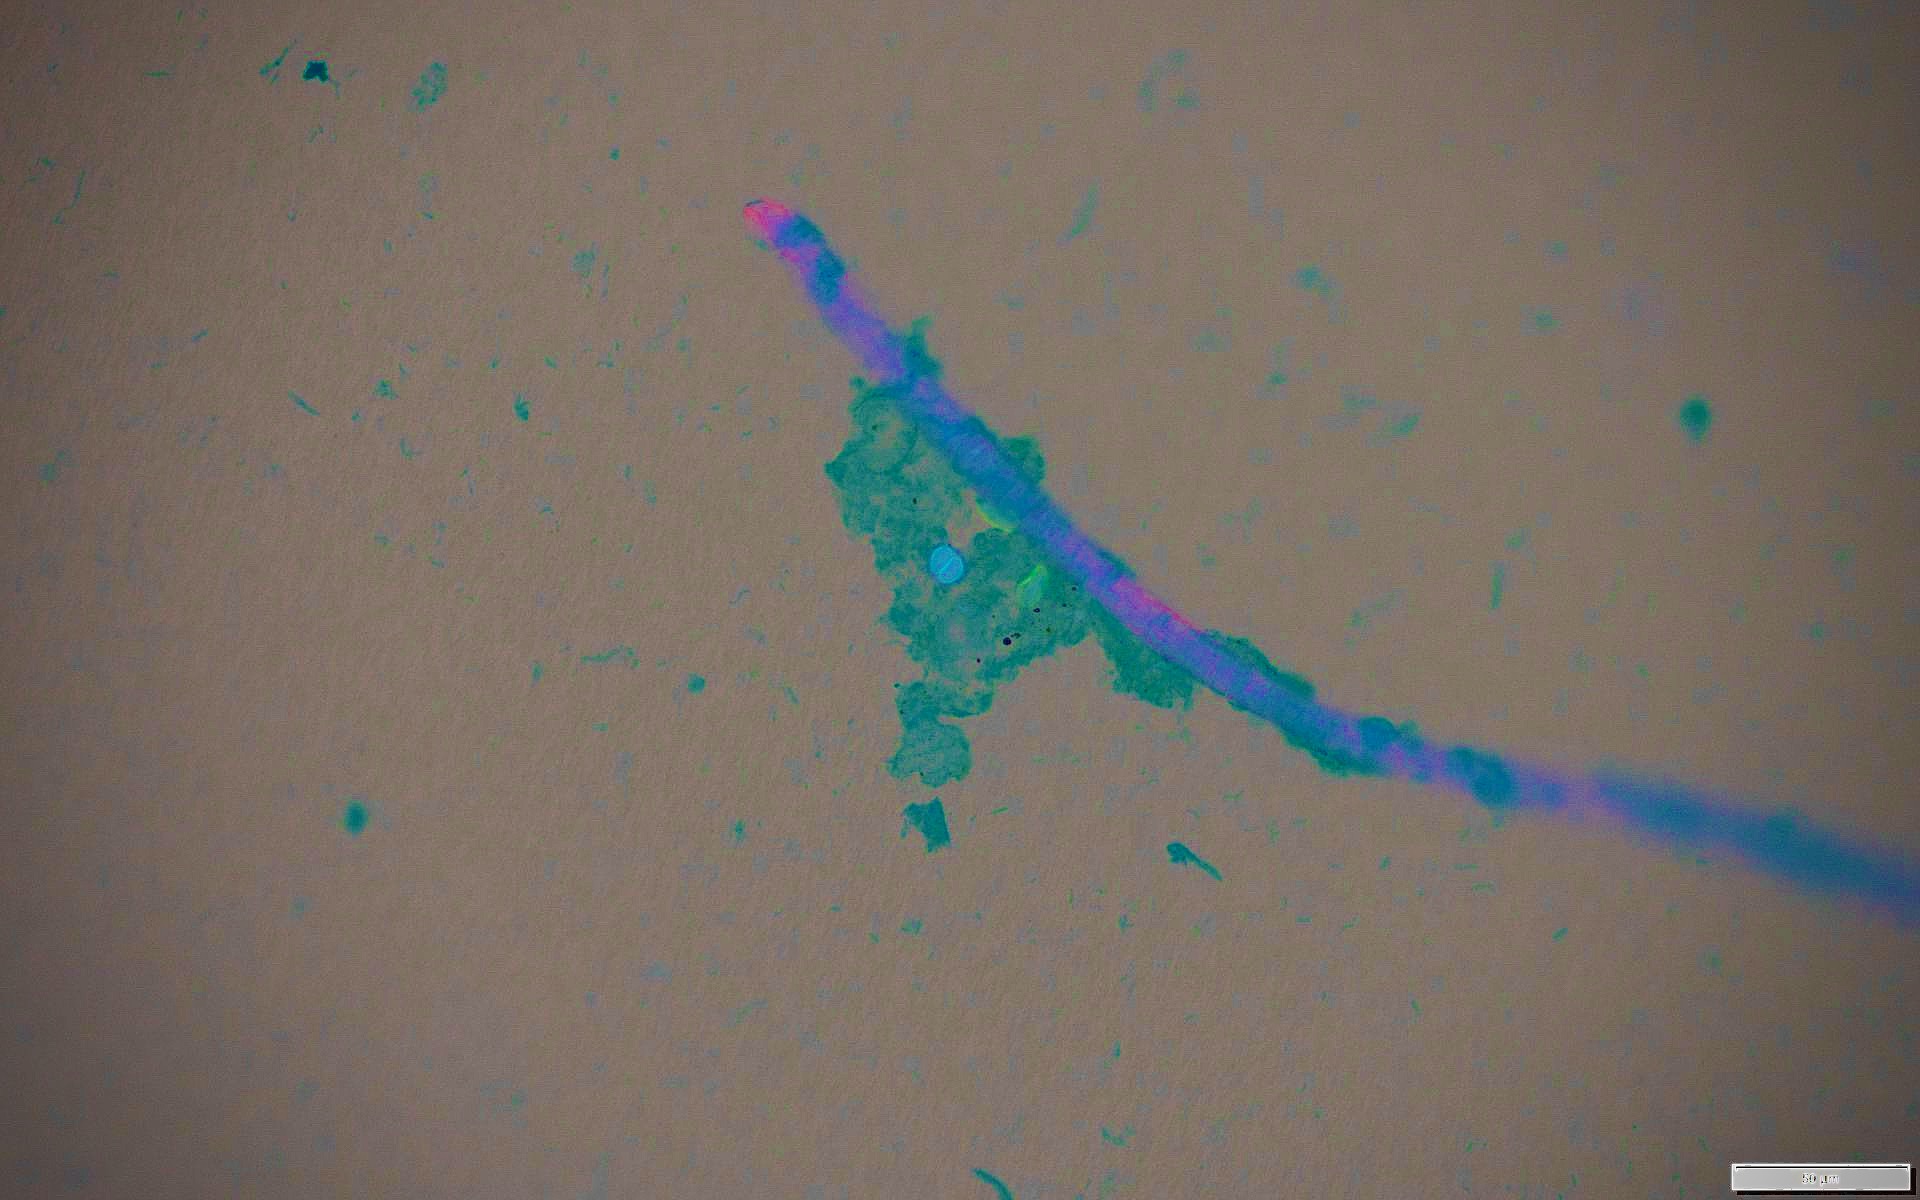 microplastic fiber and pathogens pic UC Davis